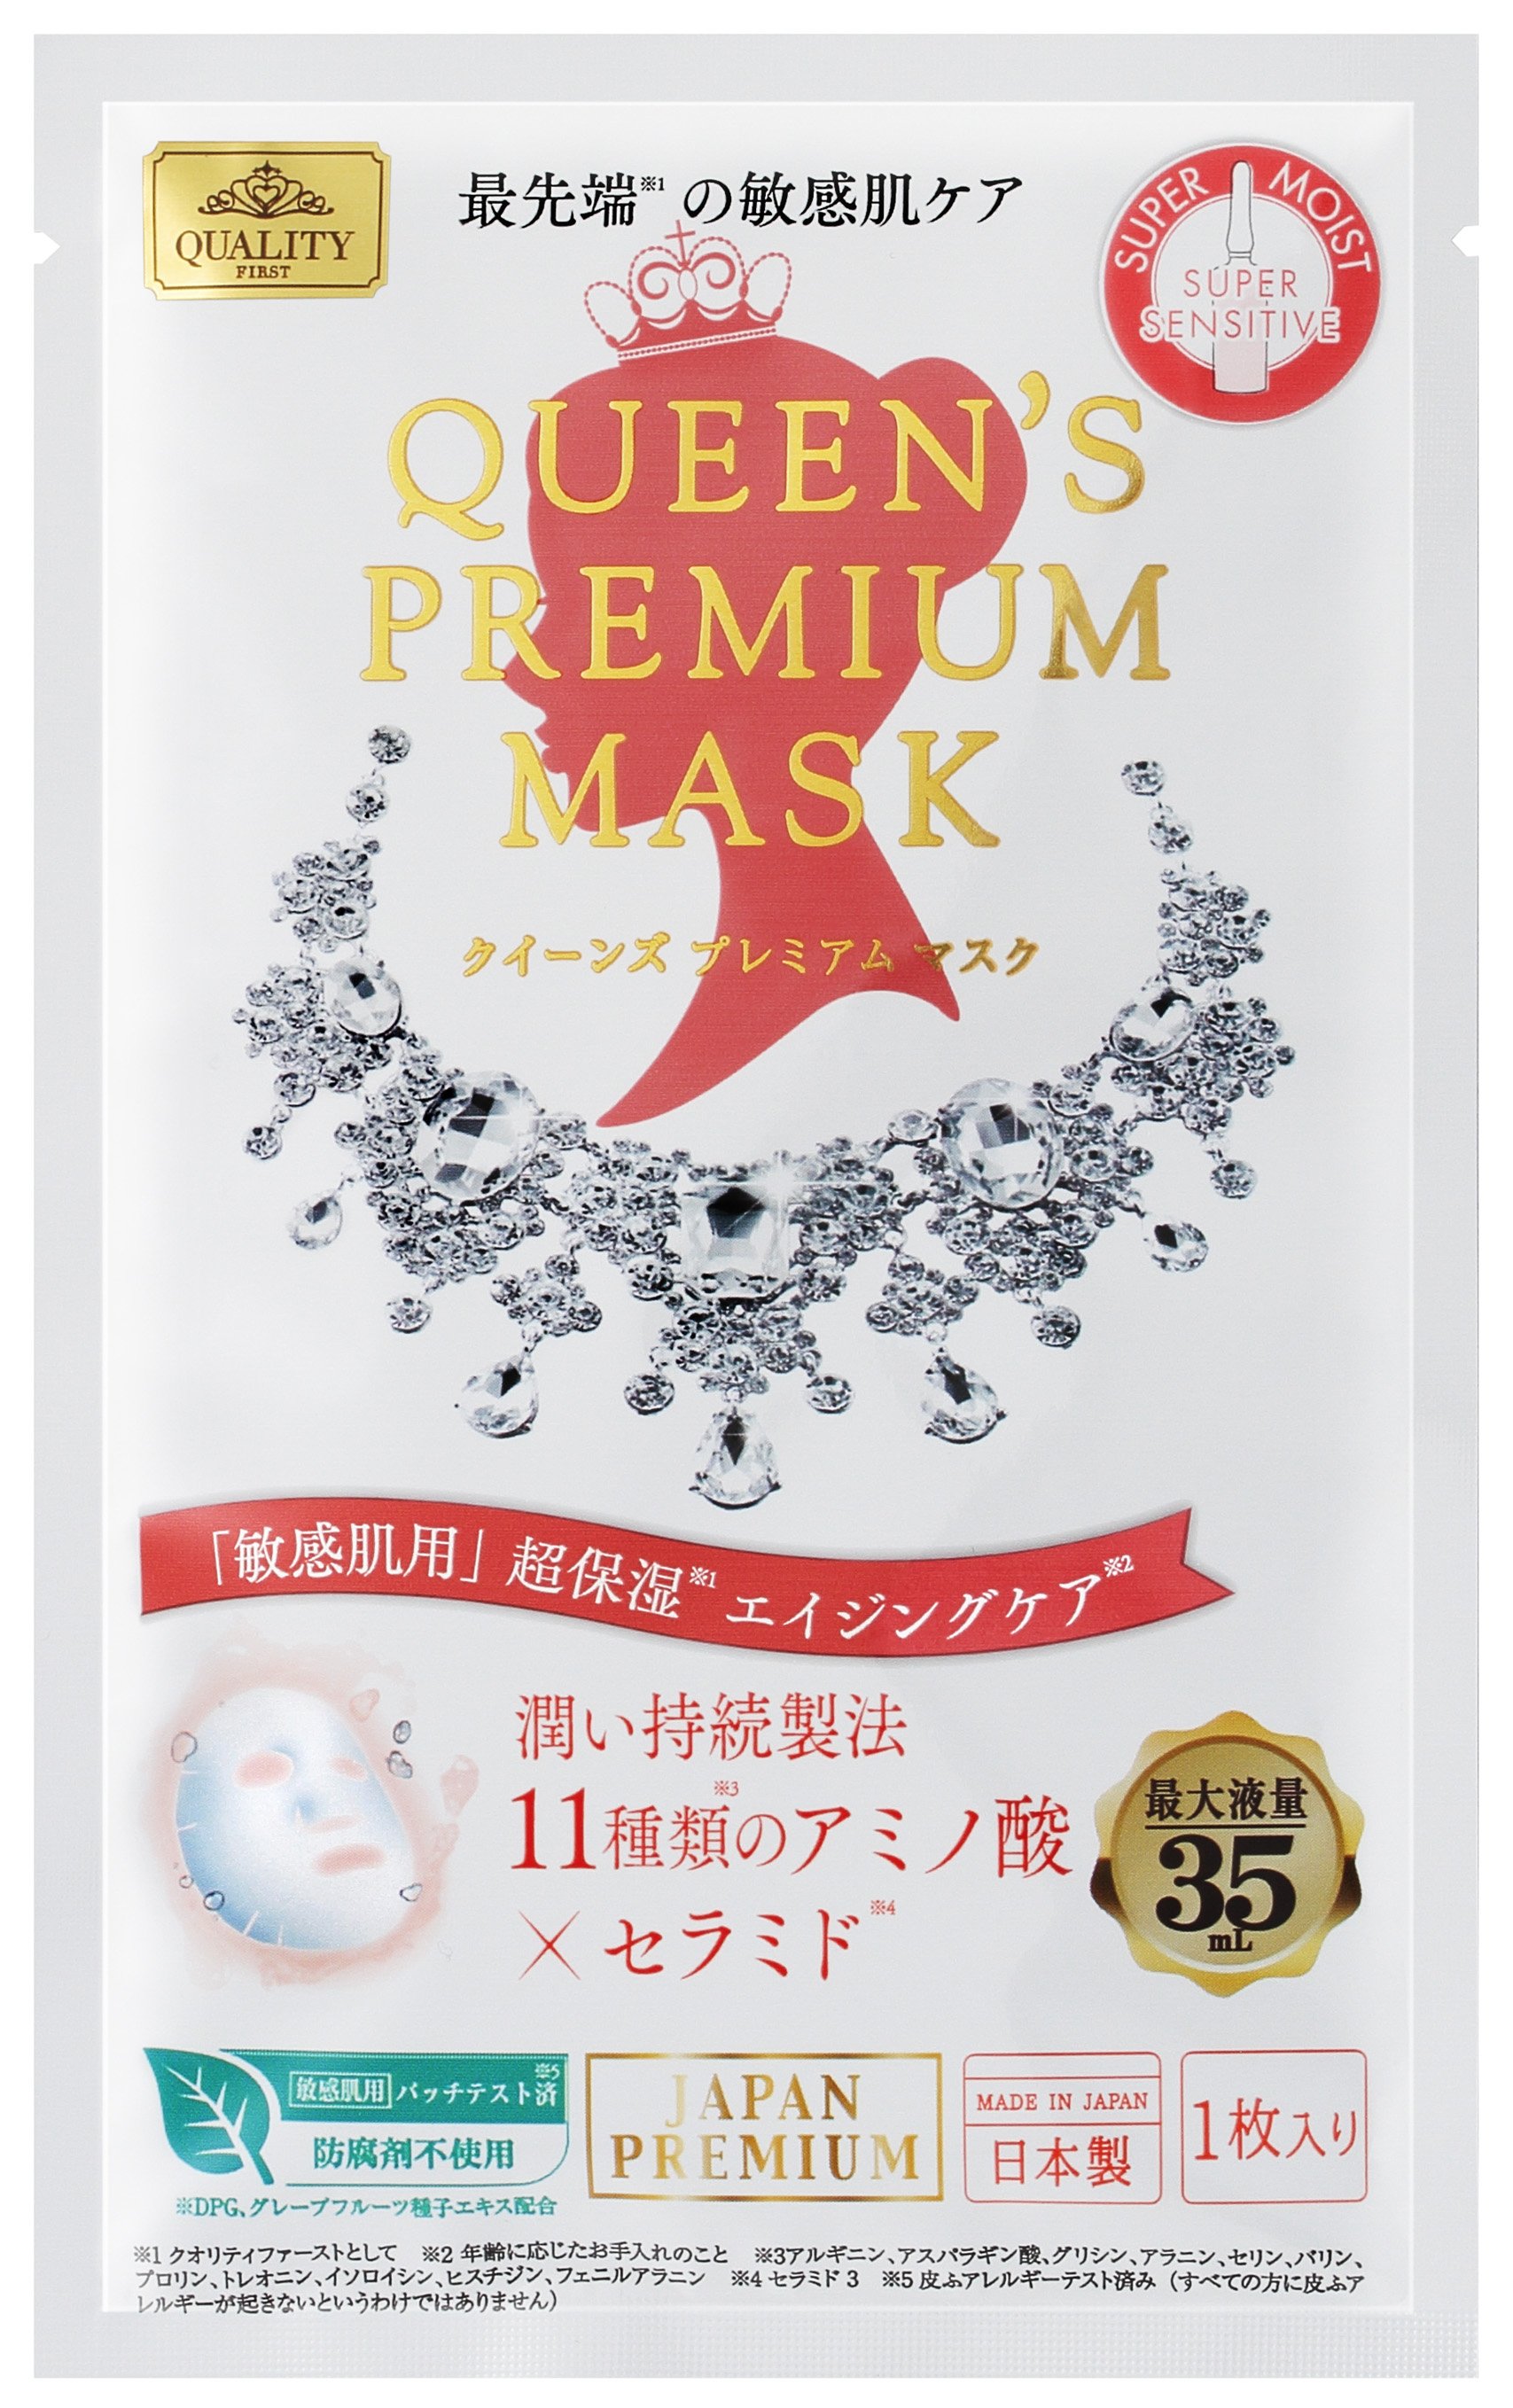 Quality 1st Queen’s Premium Super Sensitive Super Moist Mask Премиальная ультраувлажняющая маска,4шт